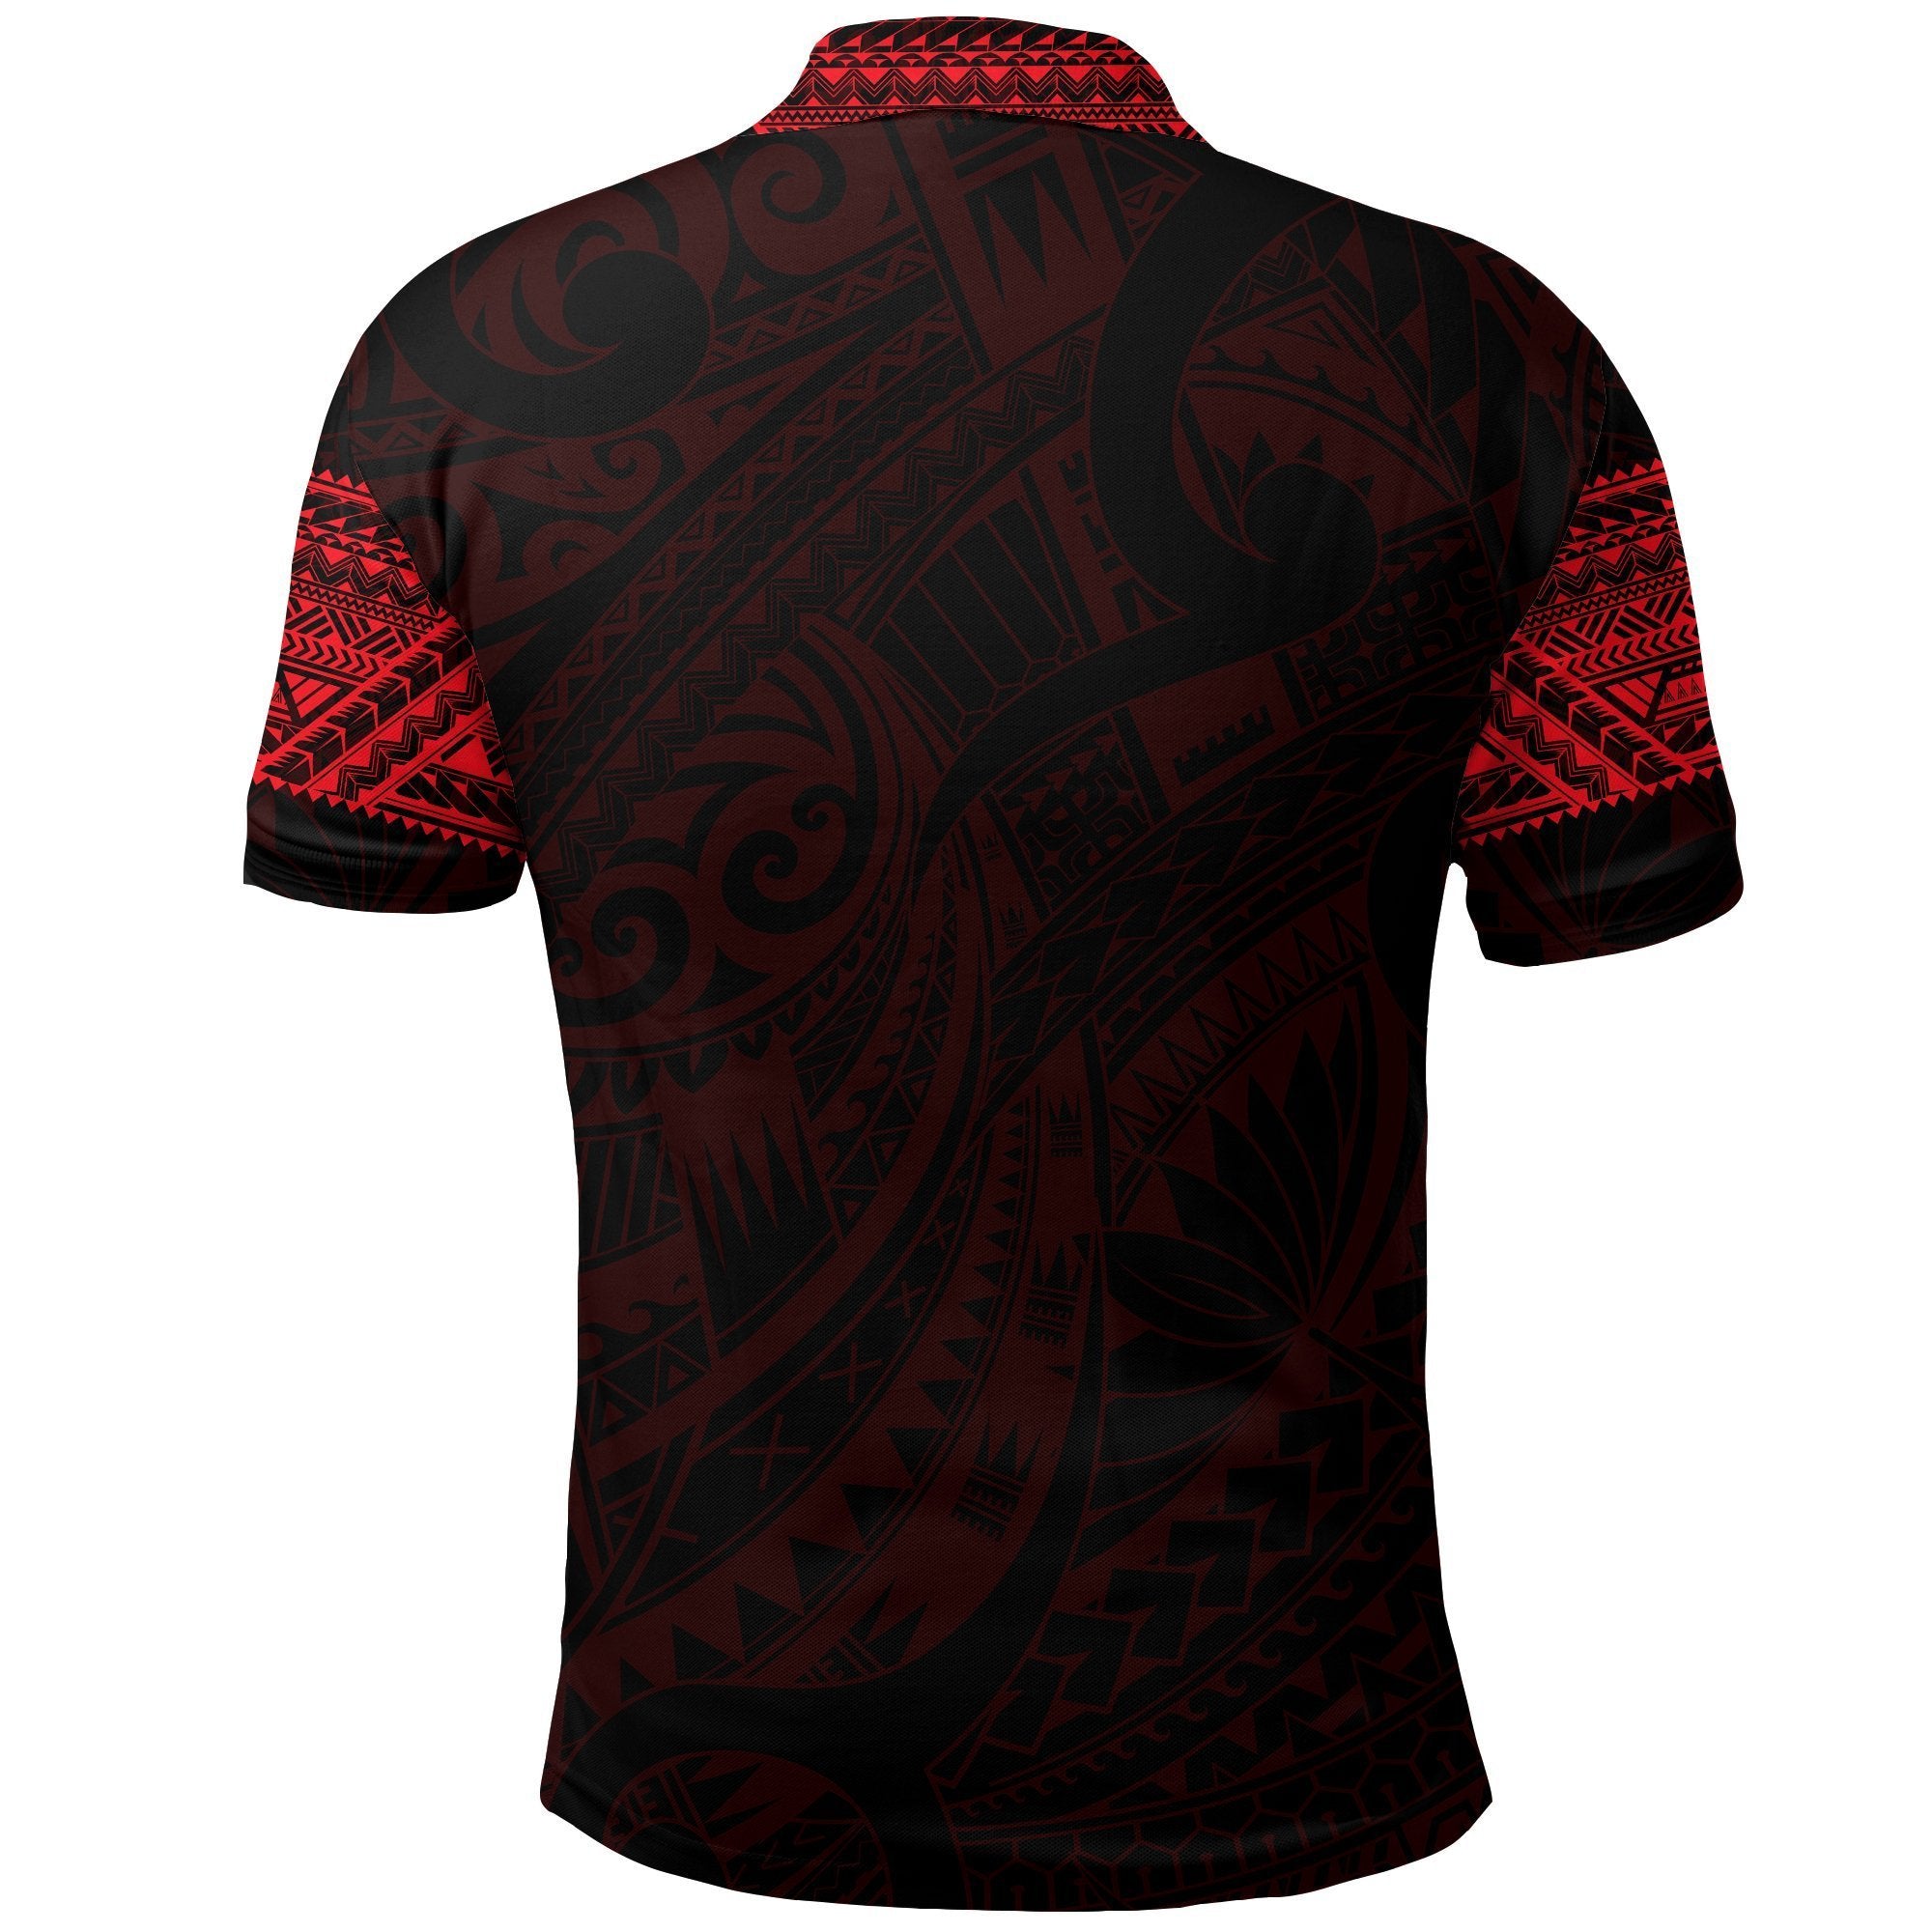 Aotearoa Maori Tattoo Black And Red Polo T Shirt - TattoosCafe